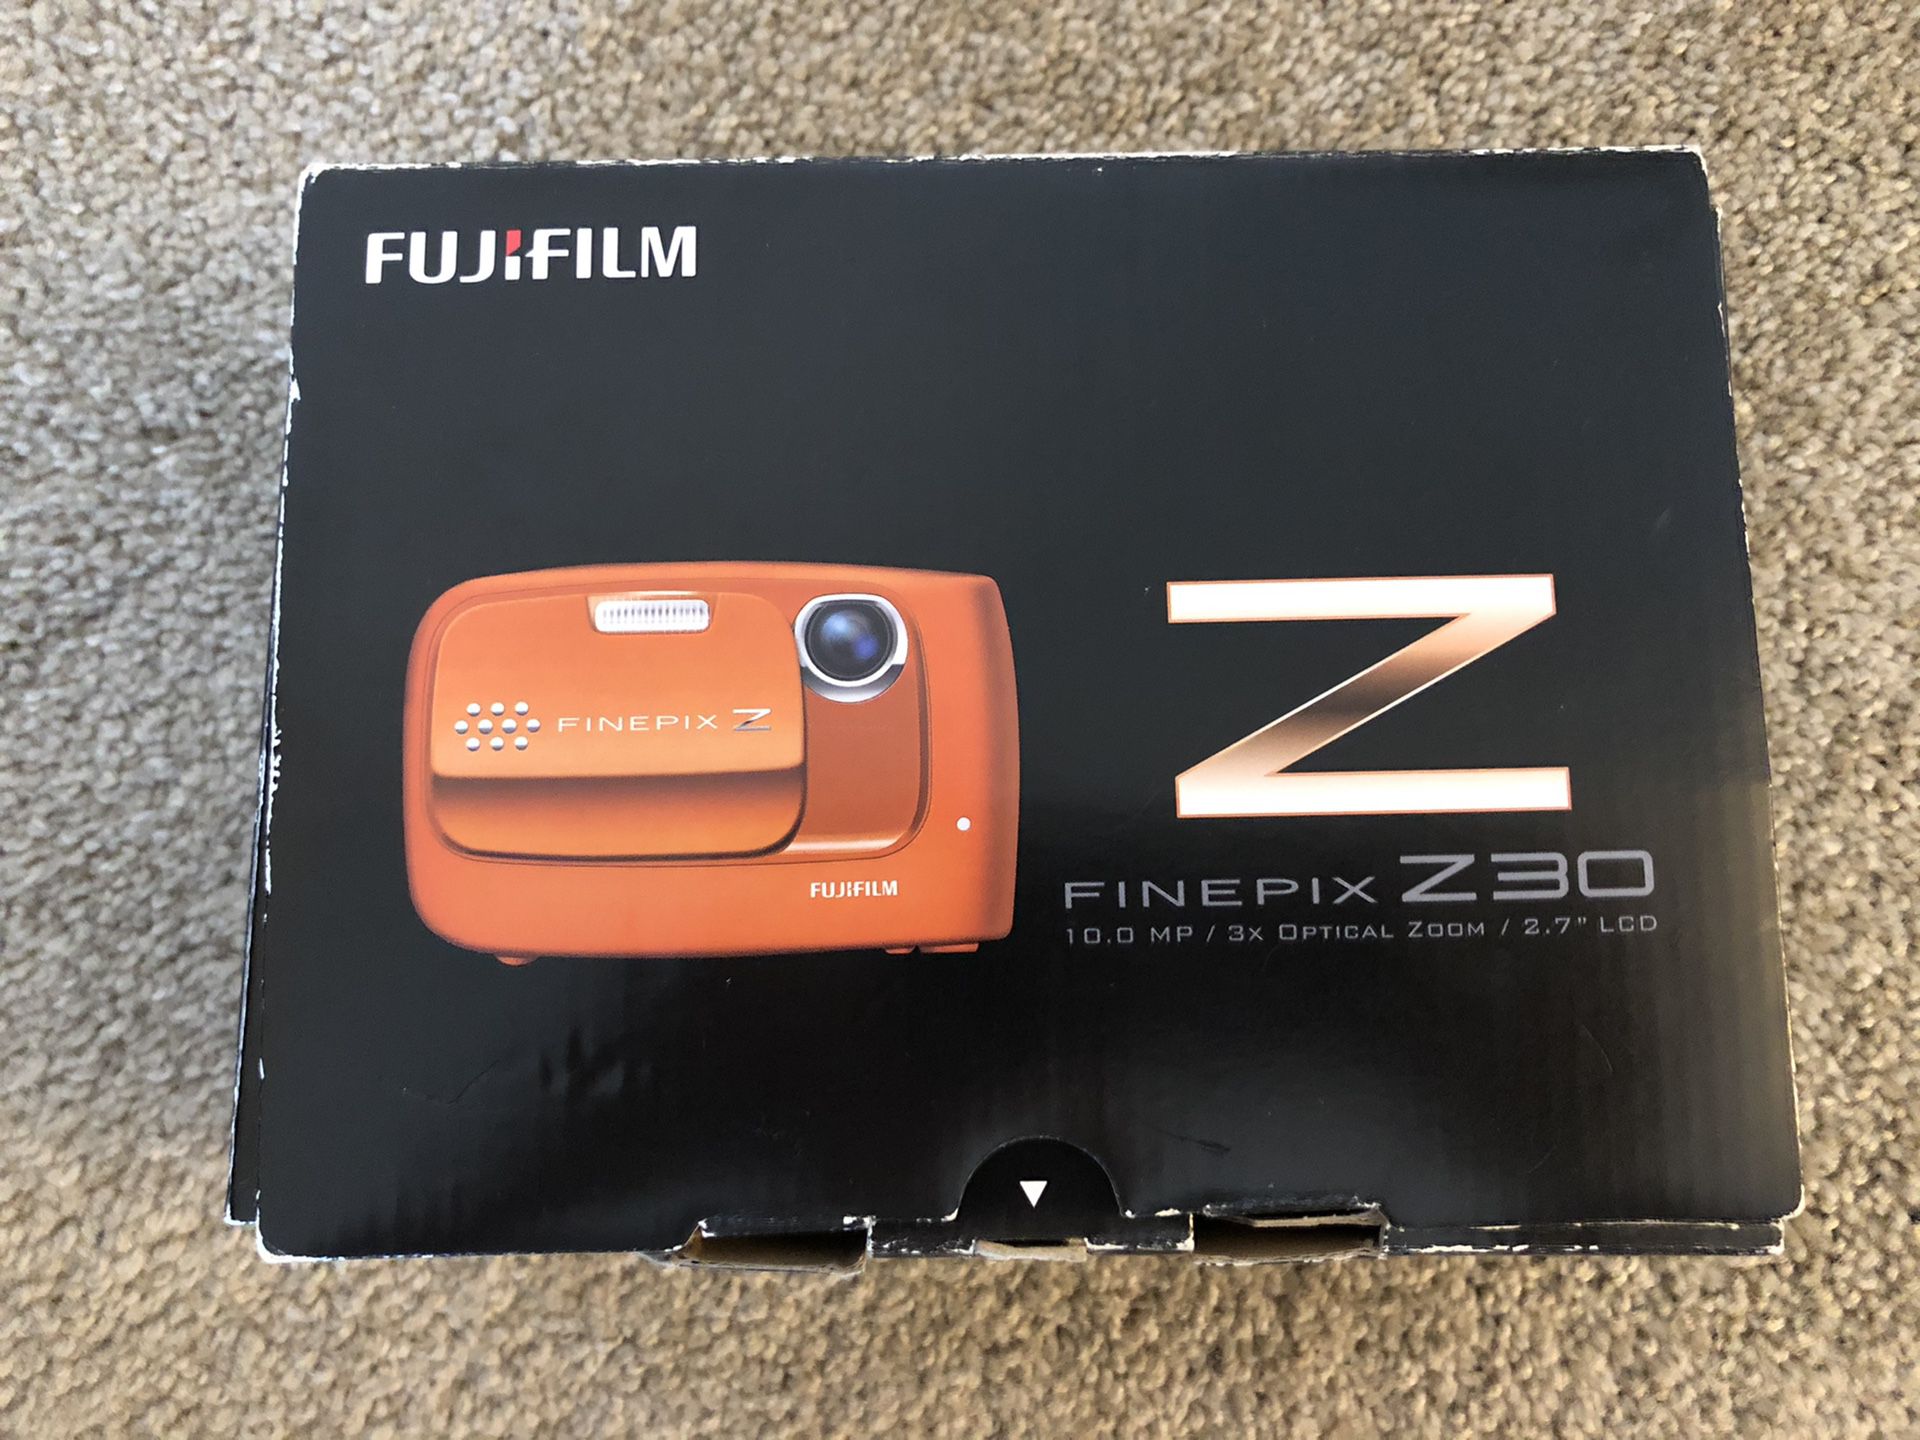 Fujifilm finepix digital camera